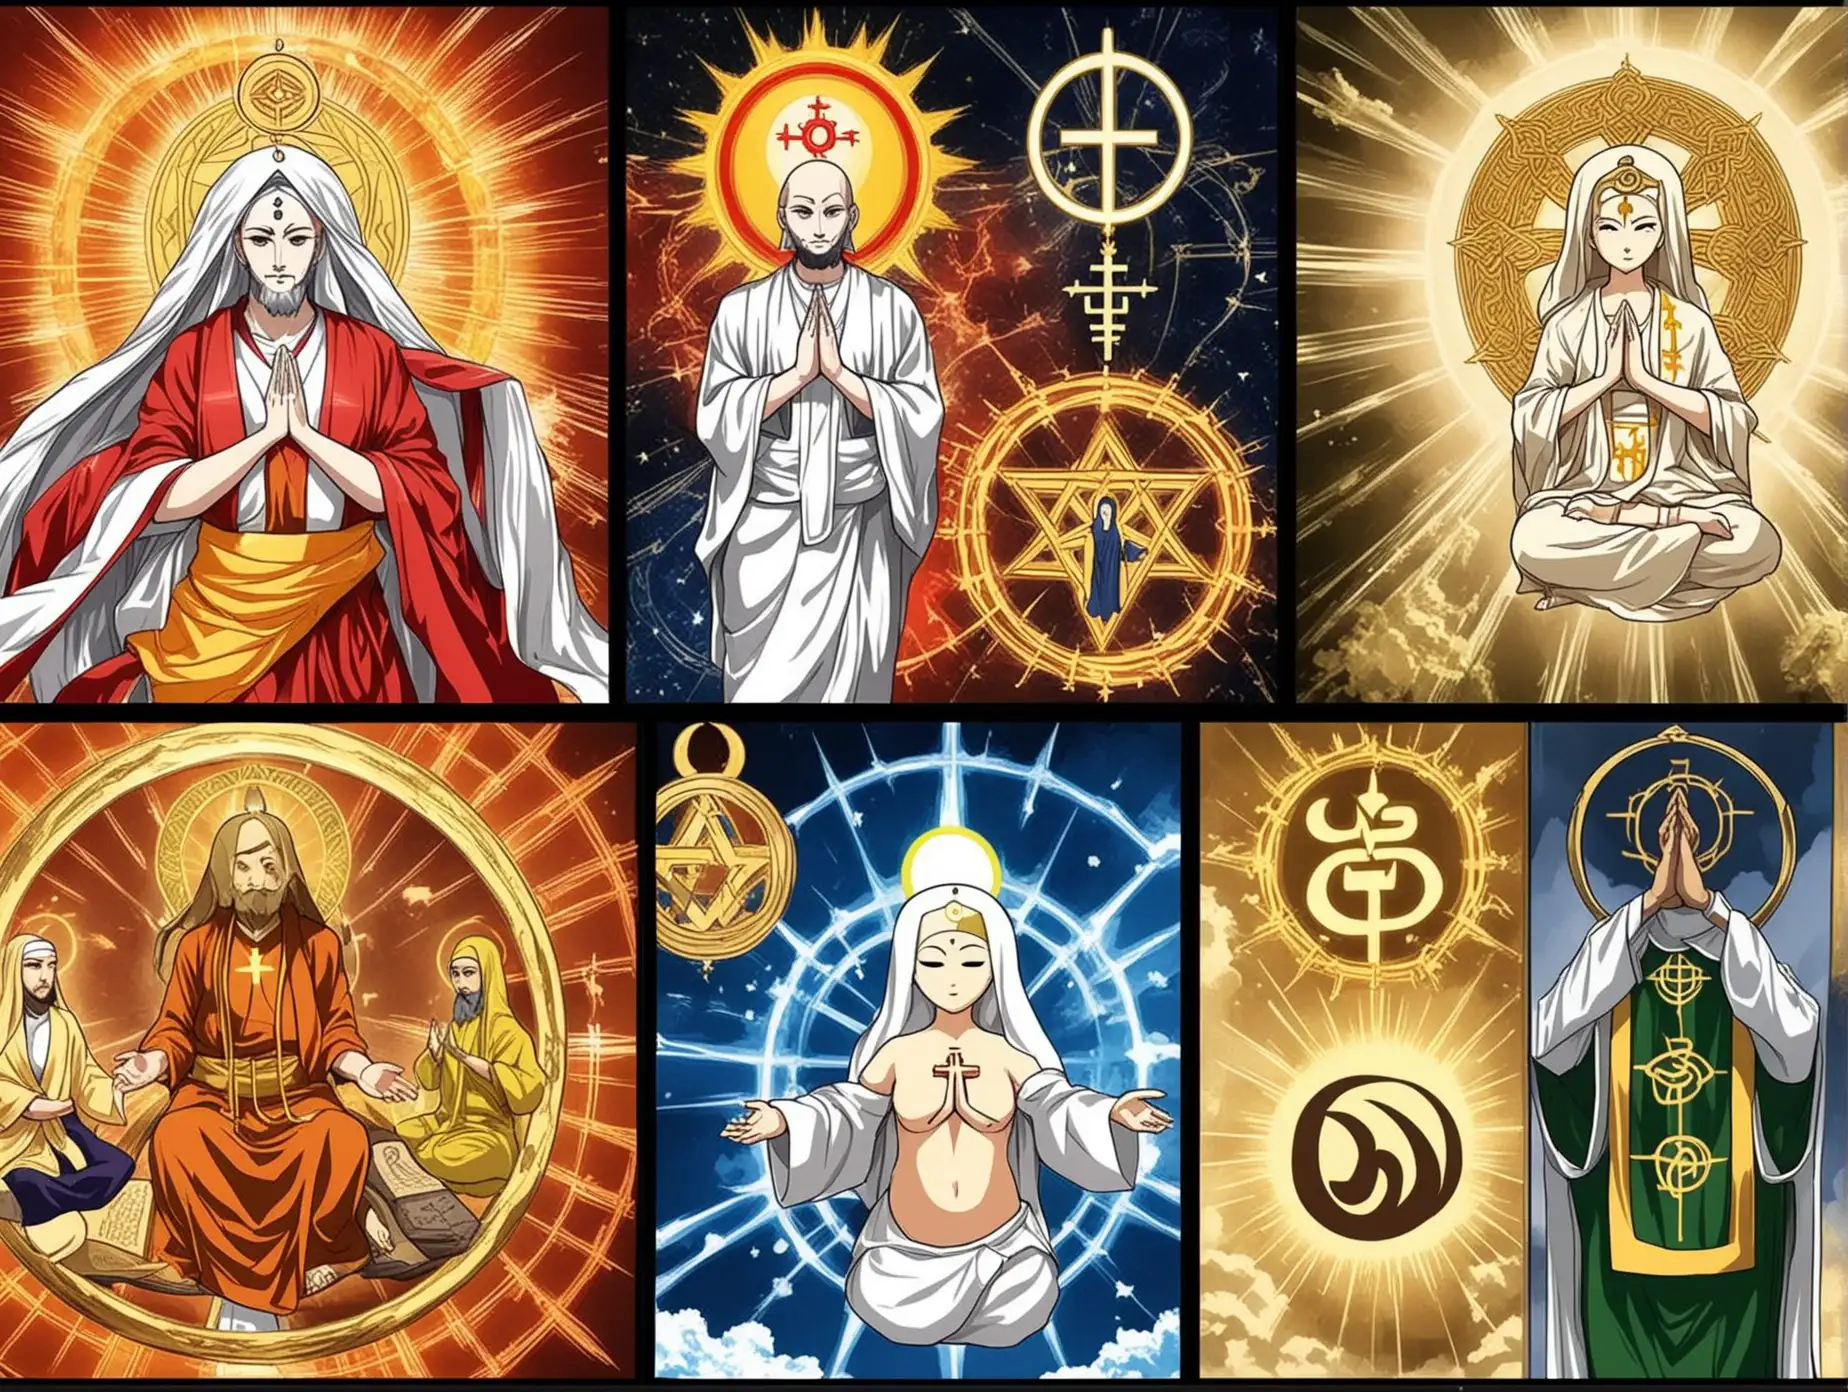 Major World Religion Symbols in Super Anime Style